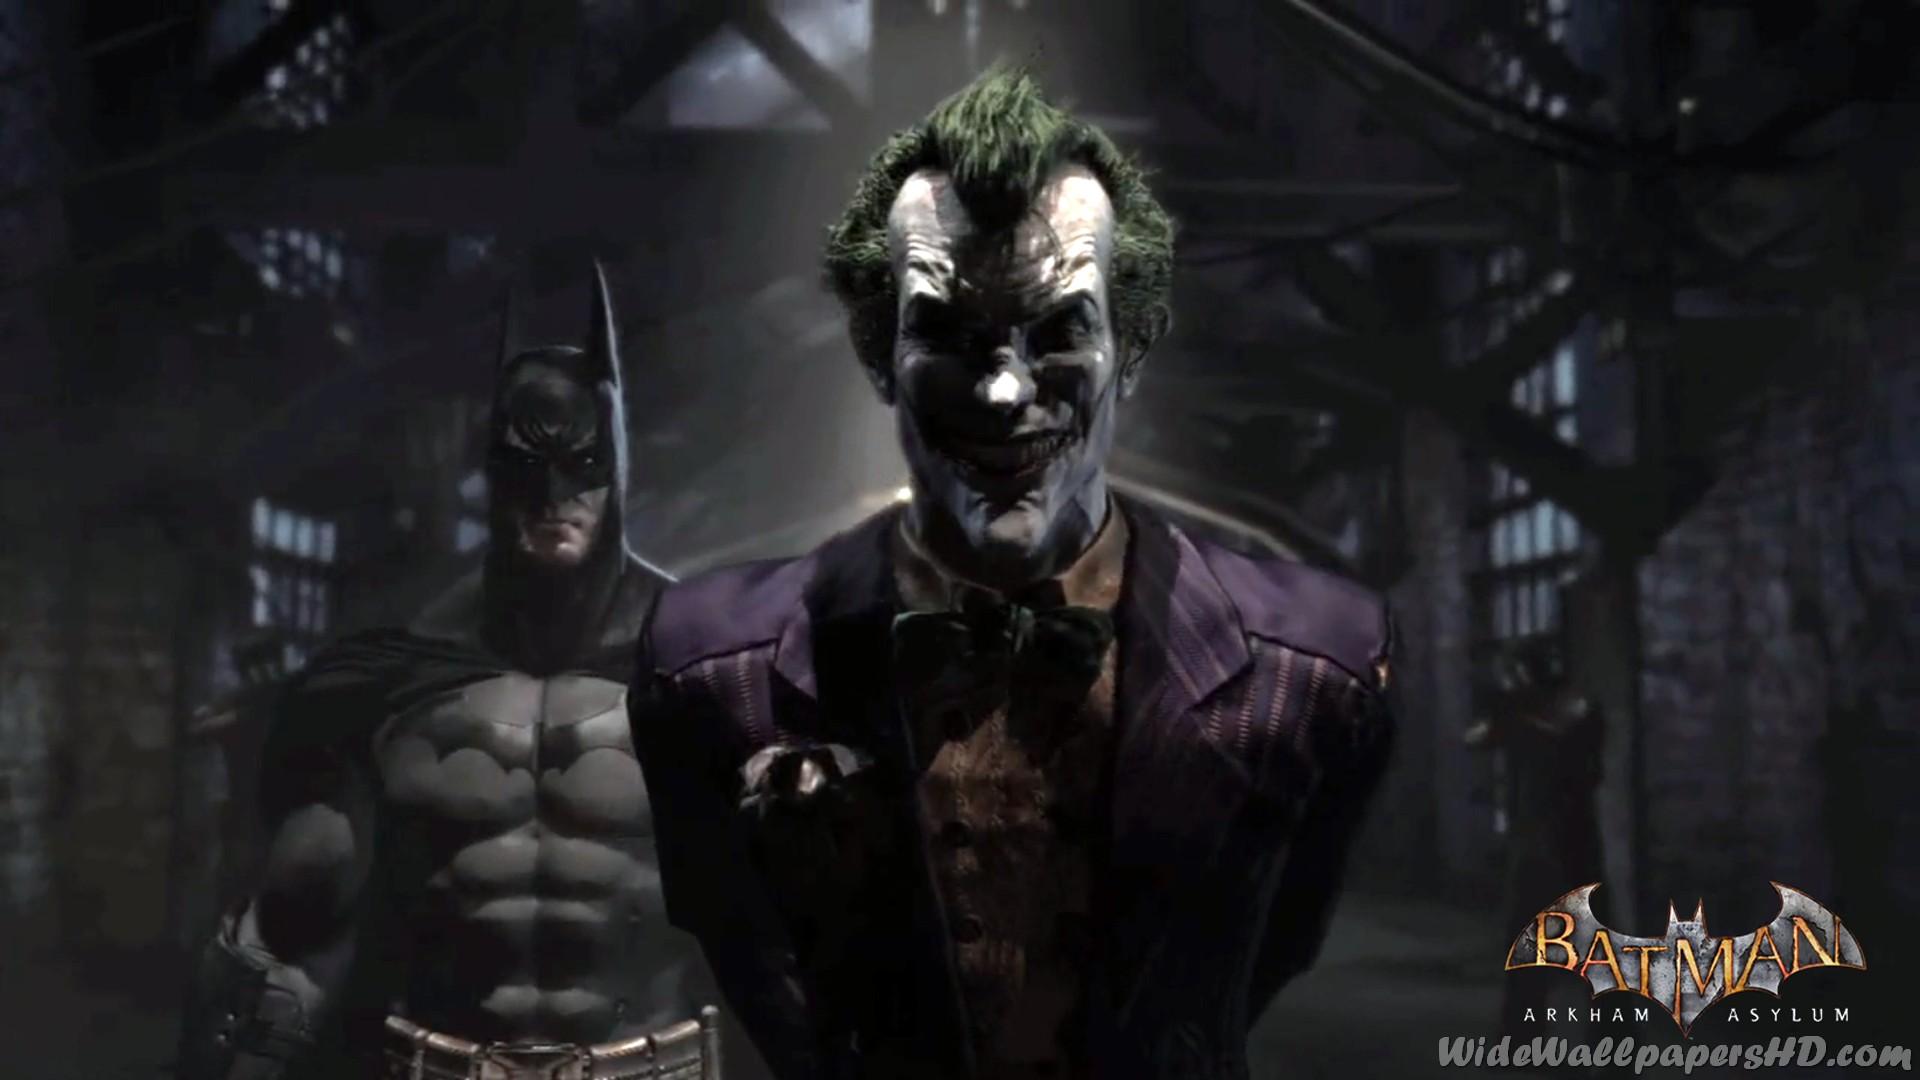 Batman: Arkham Asylum HD Wallpaper and Background Image